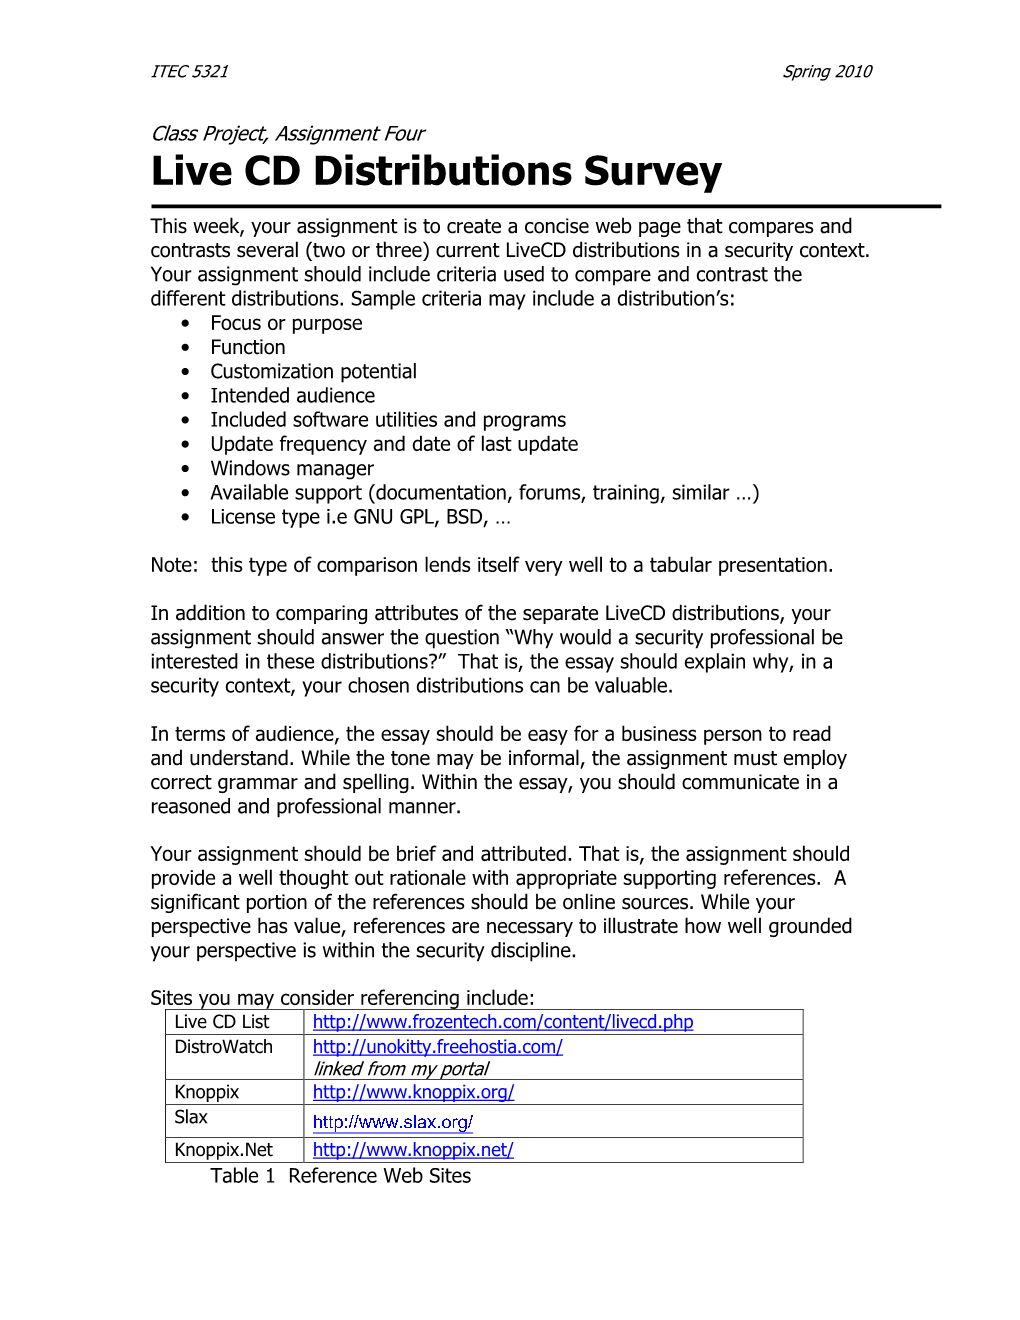 Live CD Distributions Survey